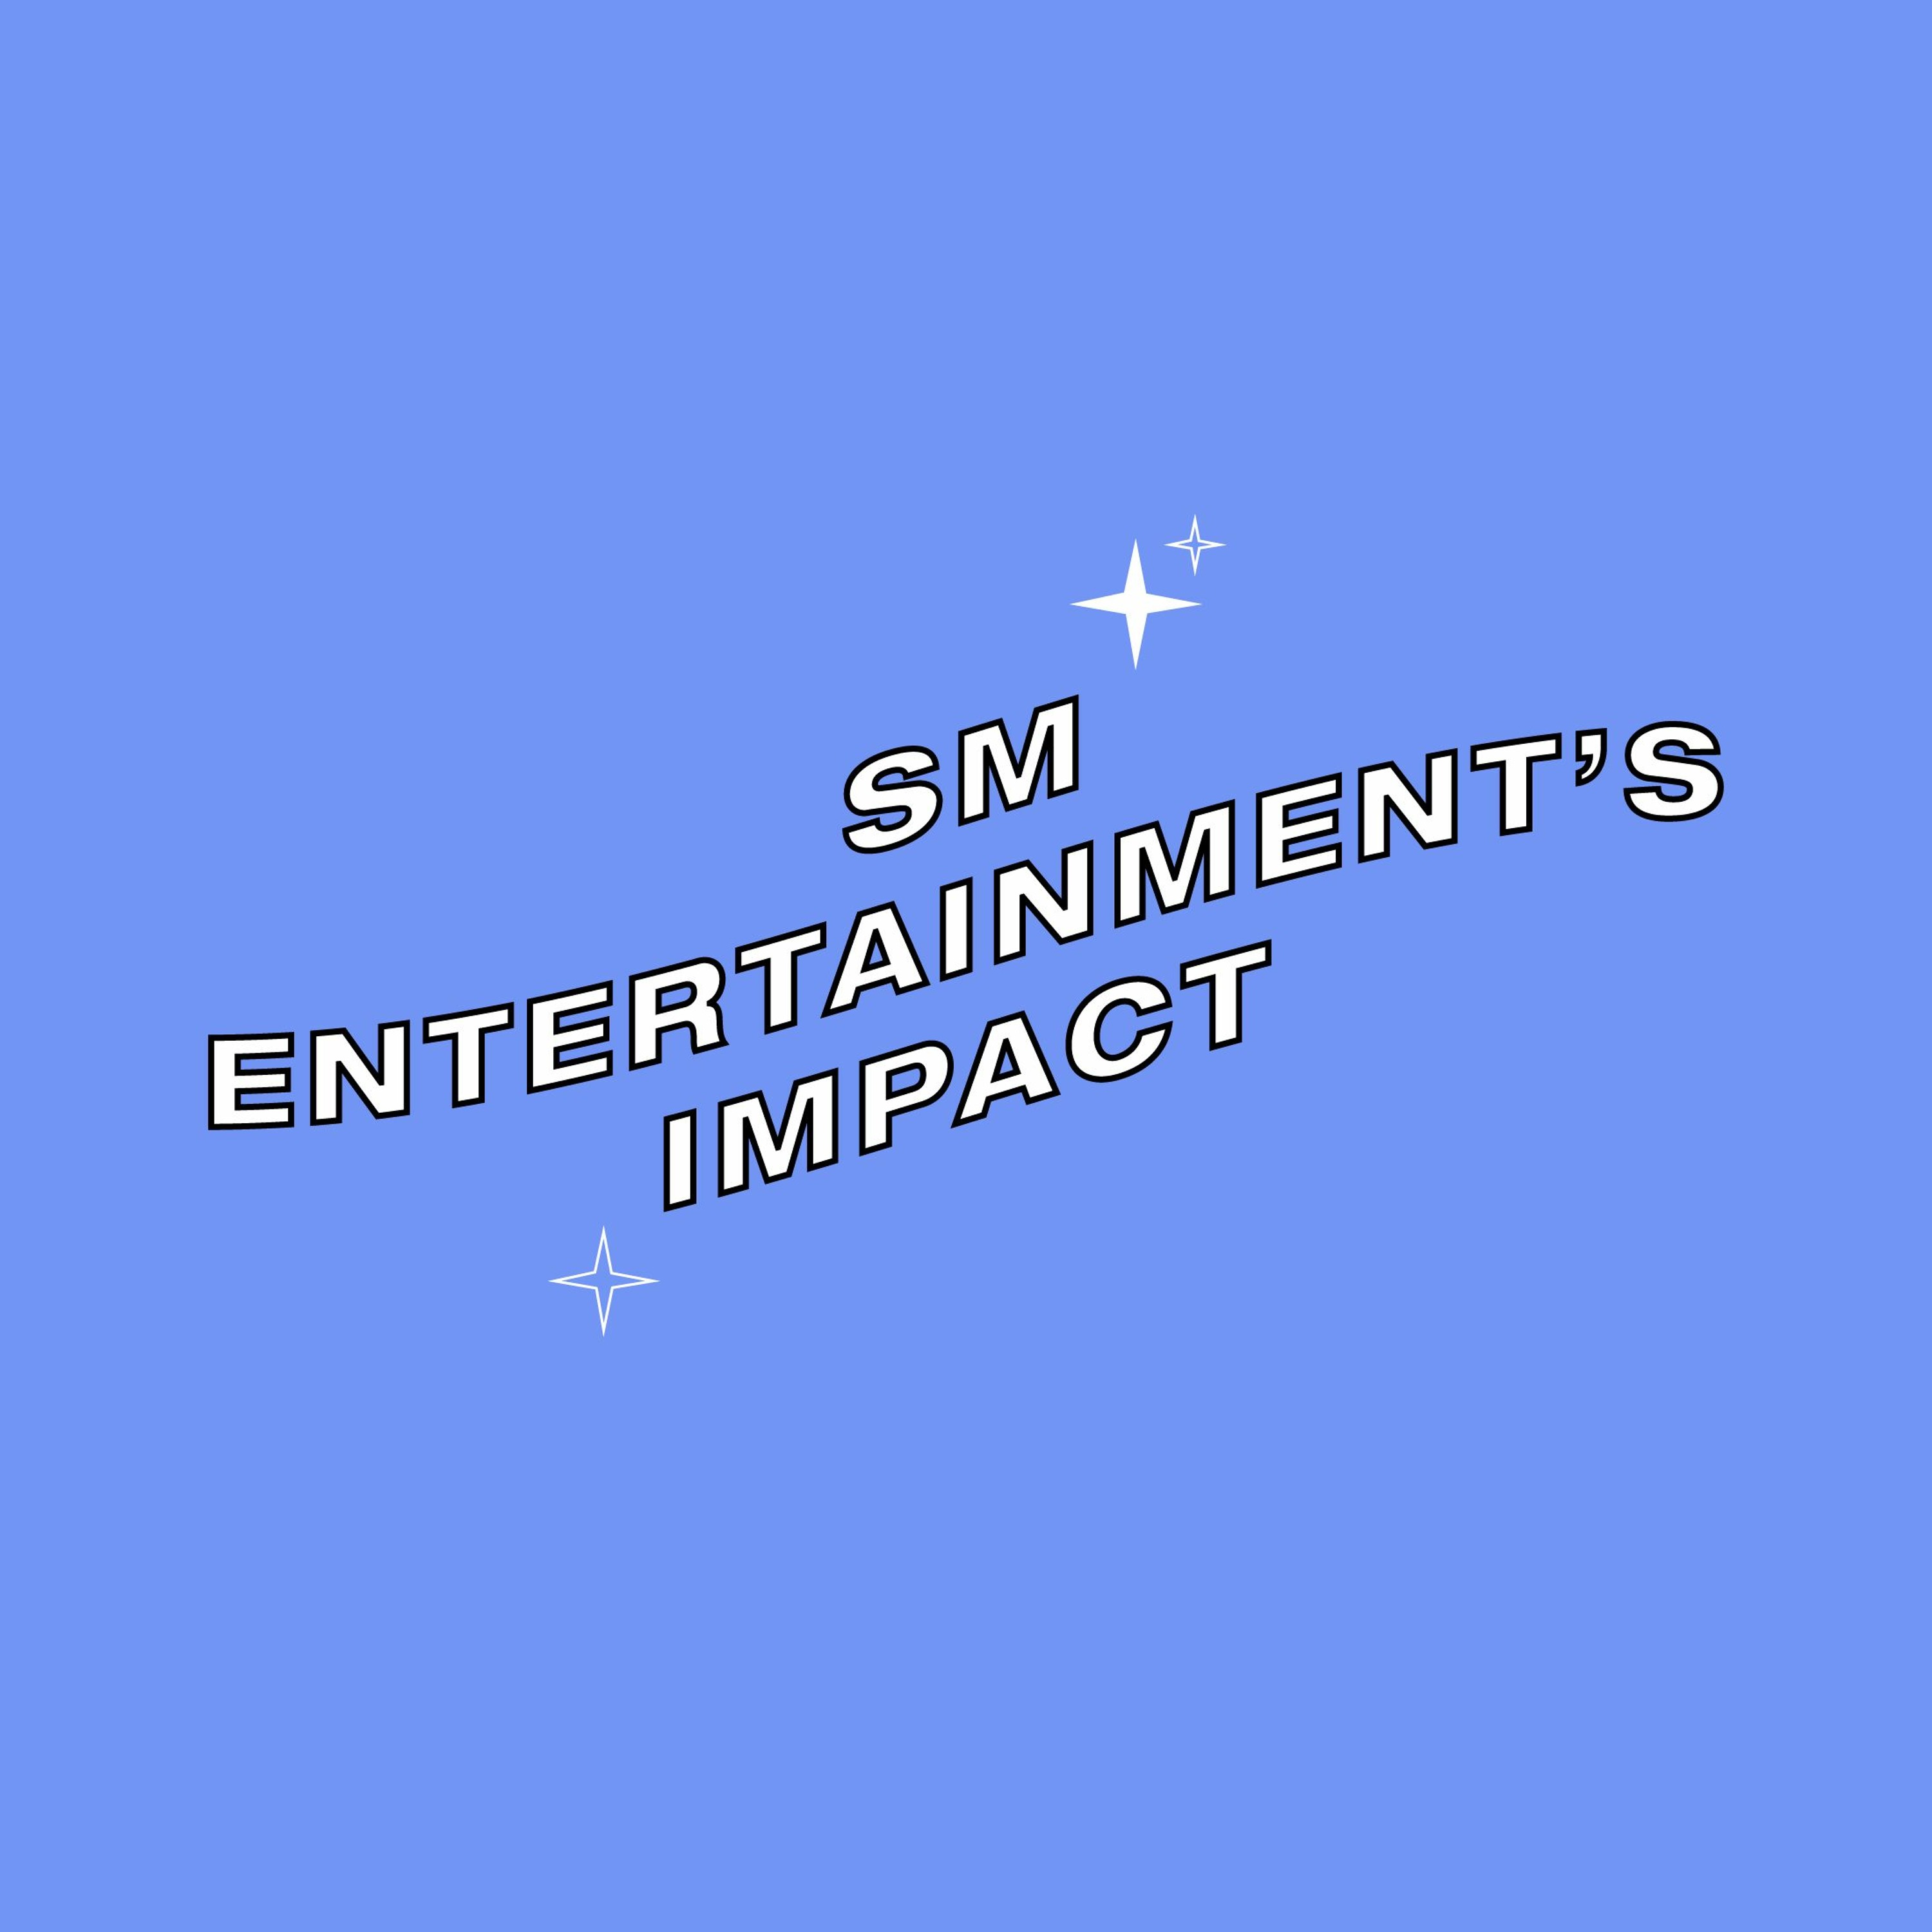 SM Entertainment's Impact